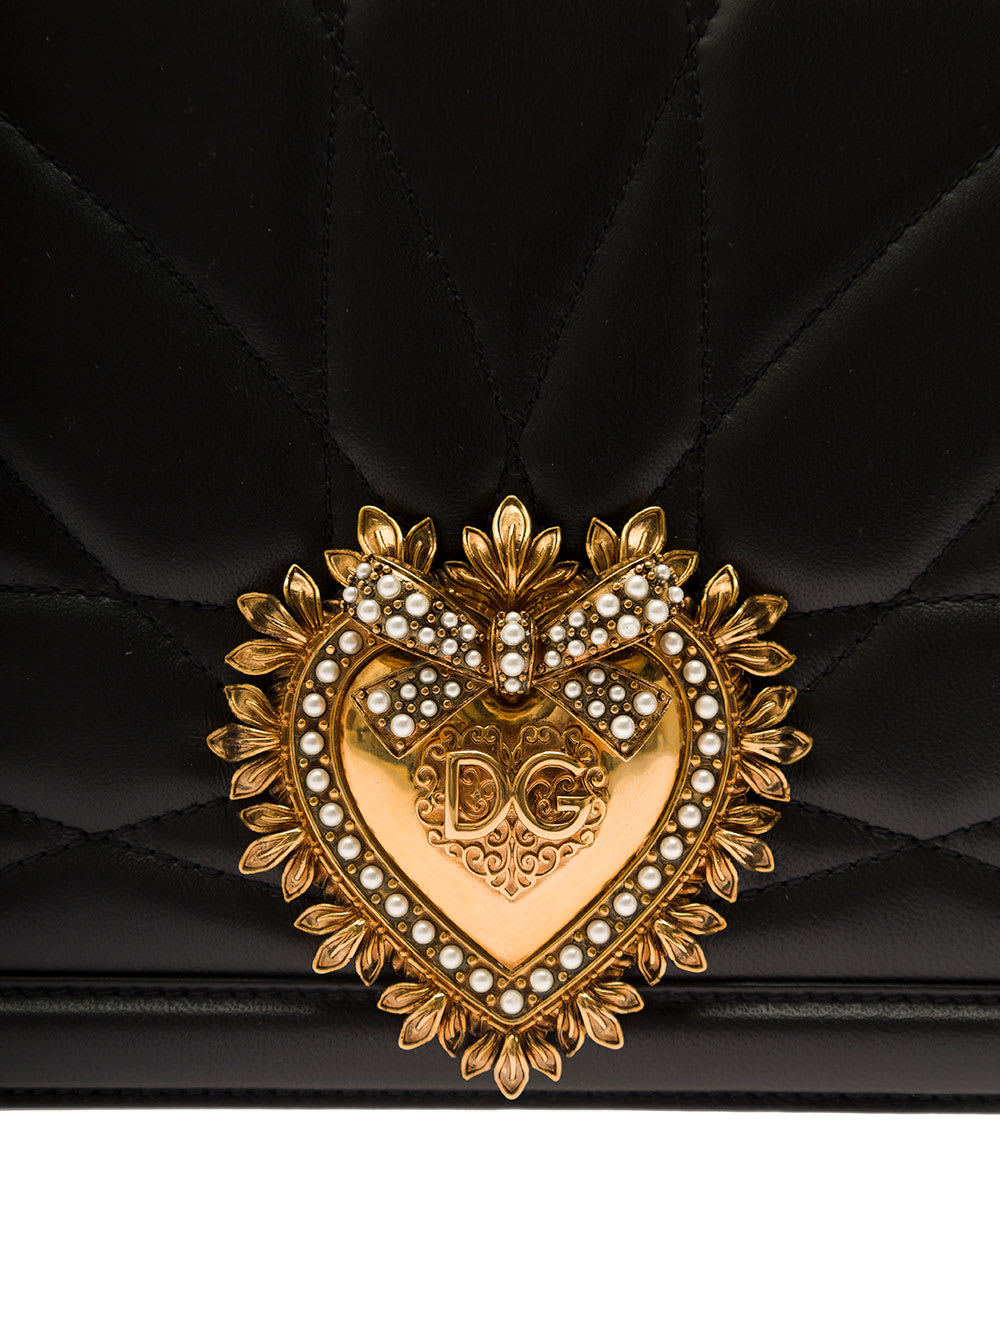 Black Devotion Shoulder Bag In Nappa Leather Matelassé Dolce & Gabbana Woman